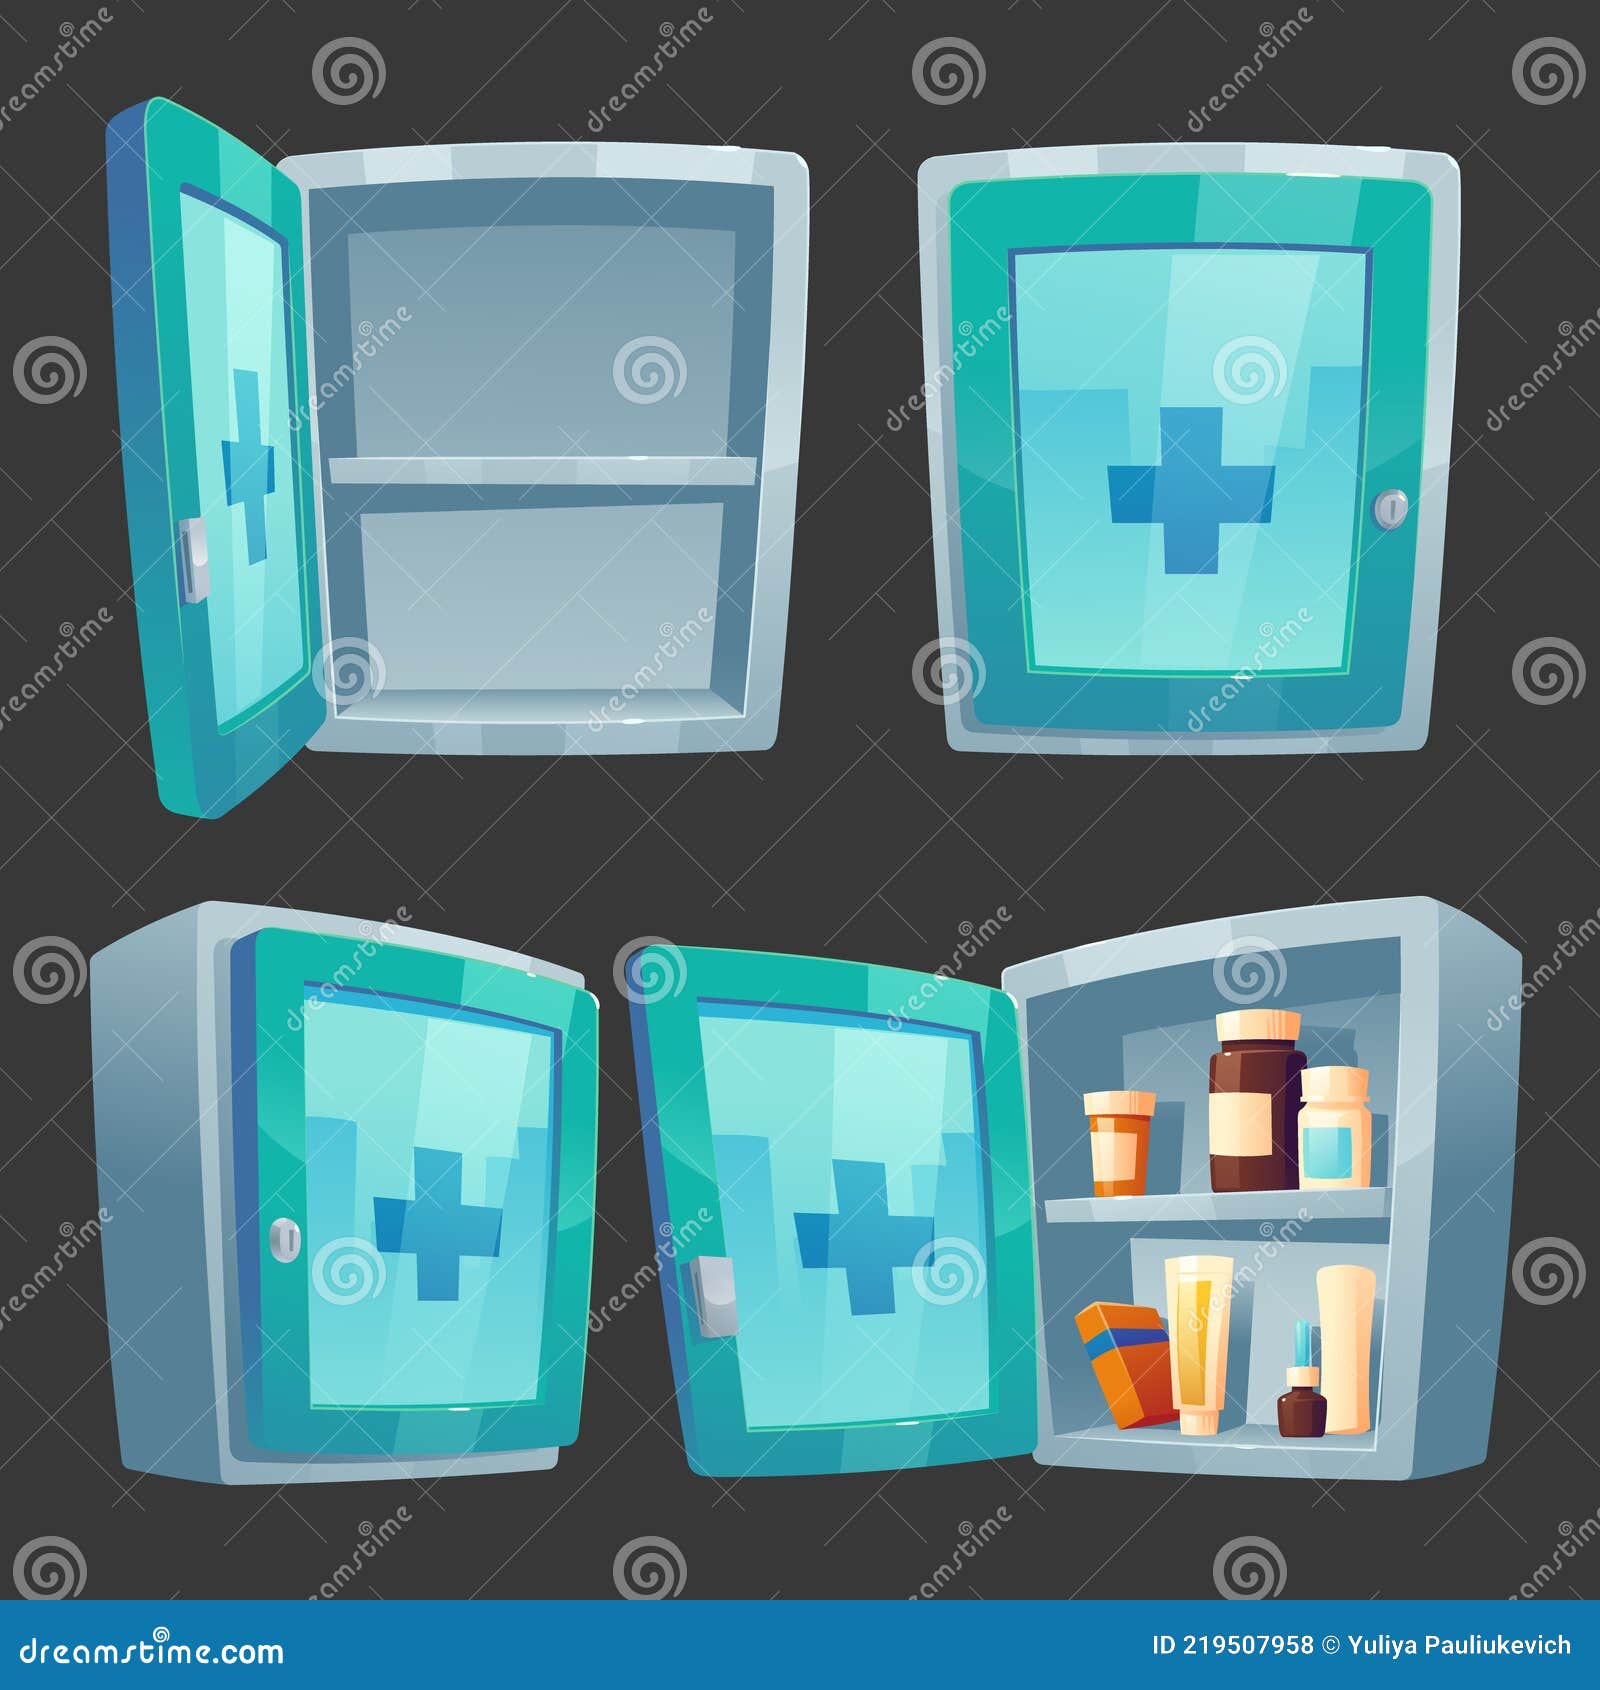 Kit de medicamentos. caixa de primeiros socorros, pílulas